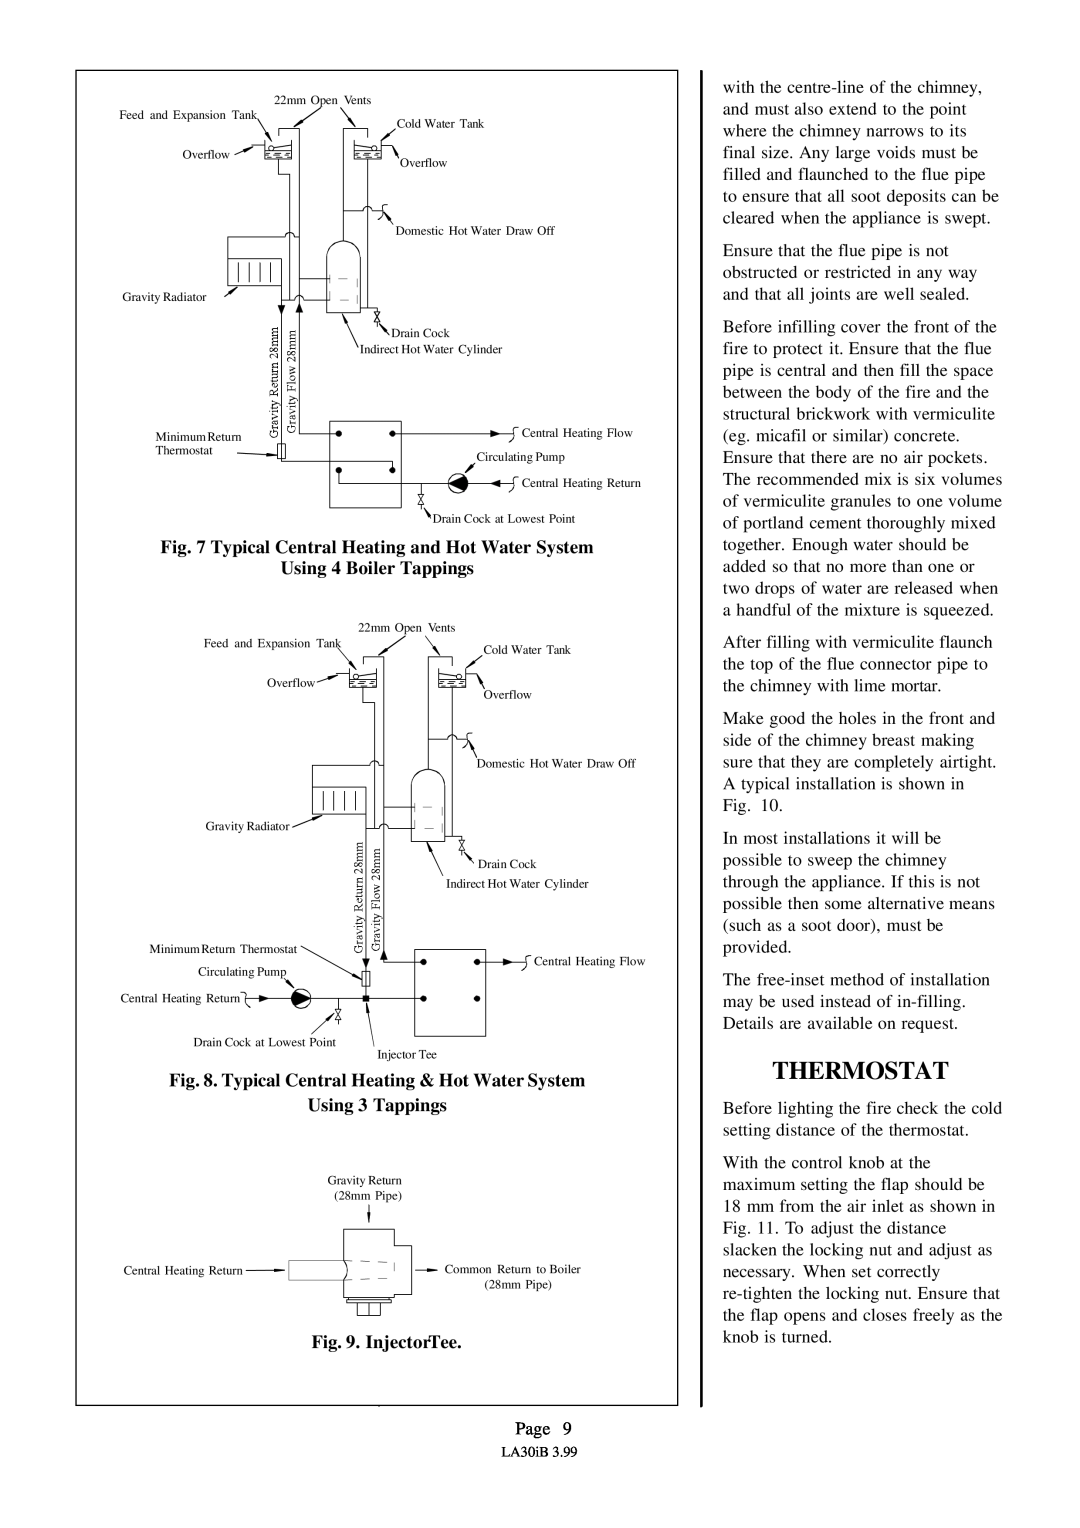 Charnwood LA30iB installation instructions Thermostat, InjectorTee 